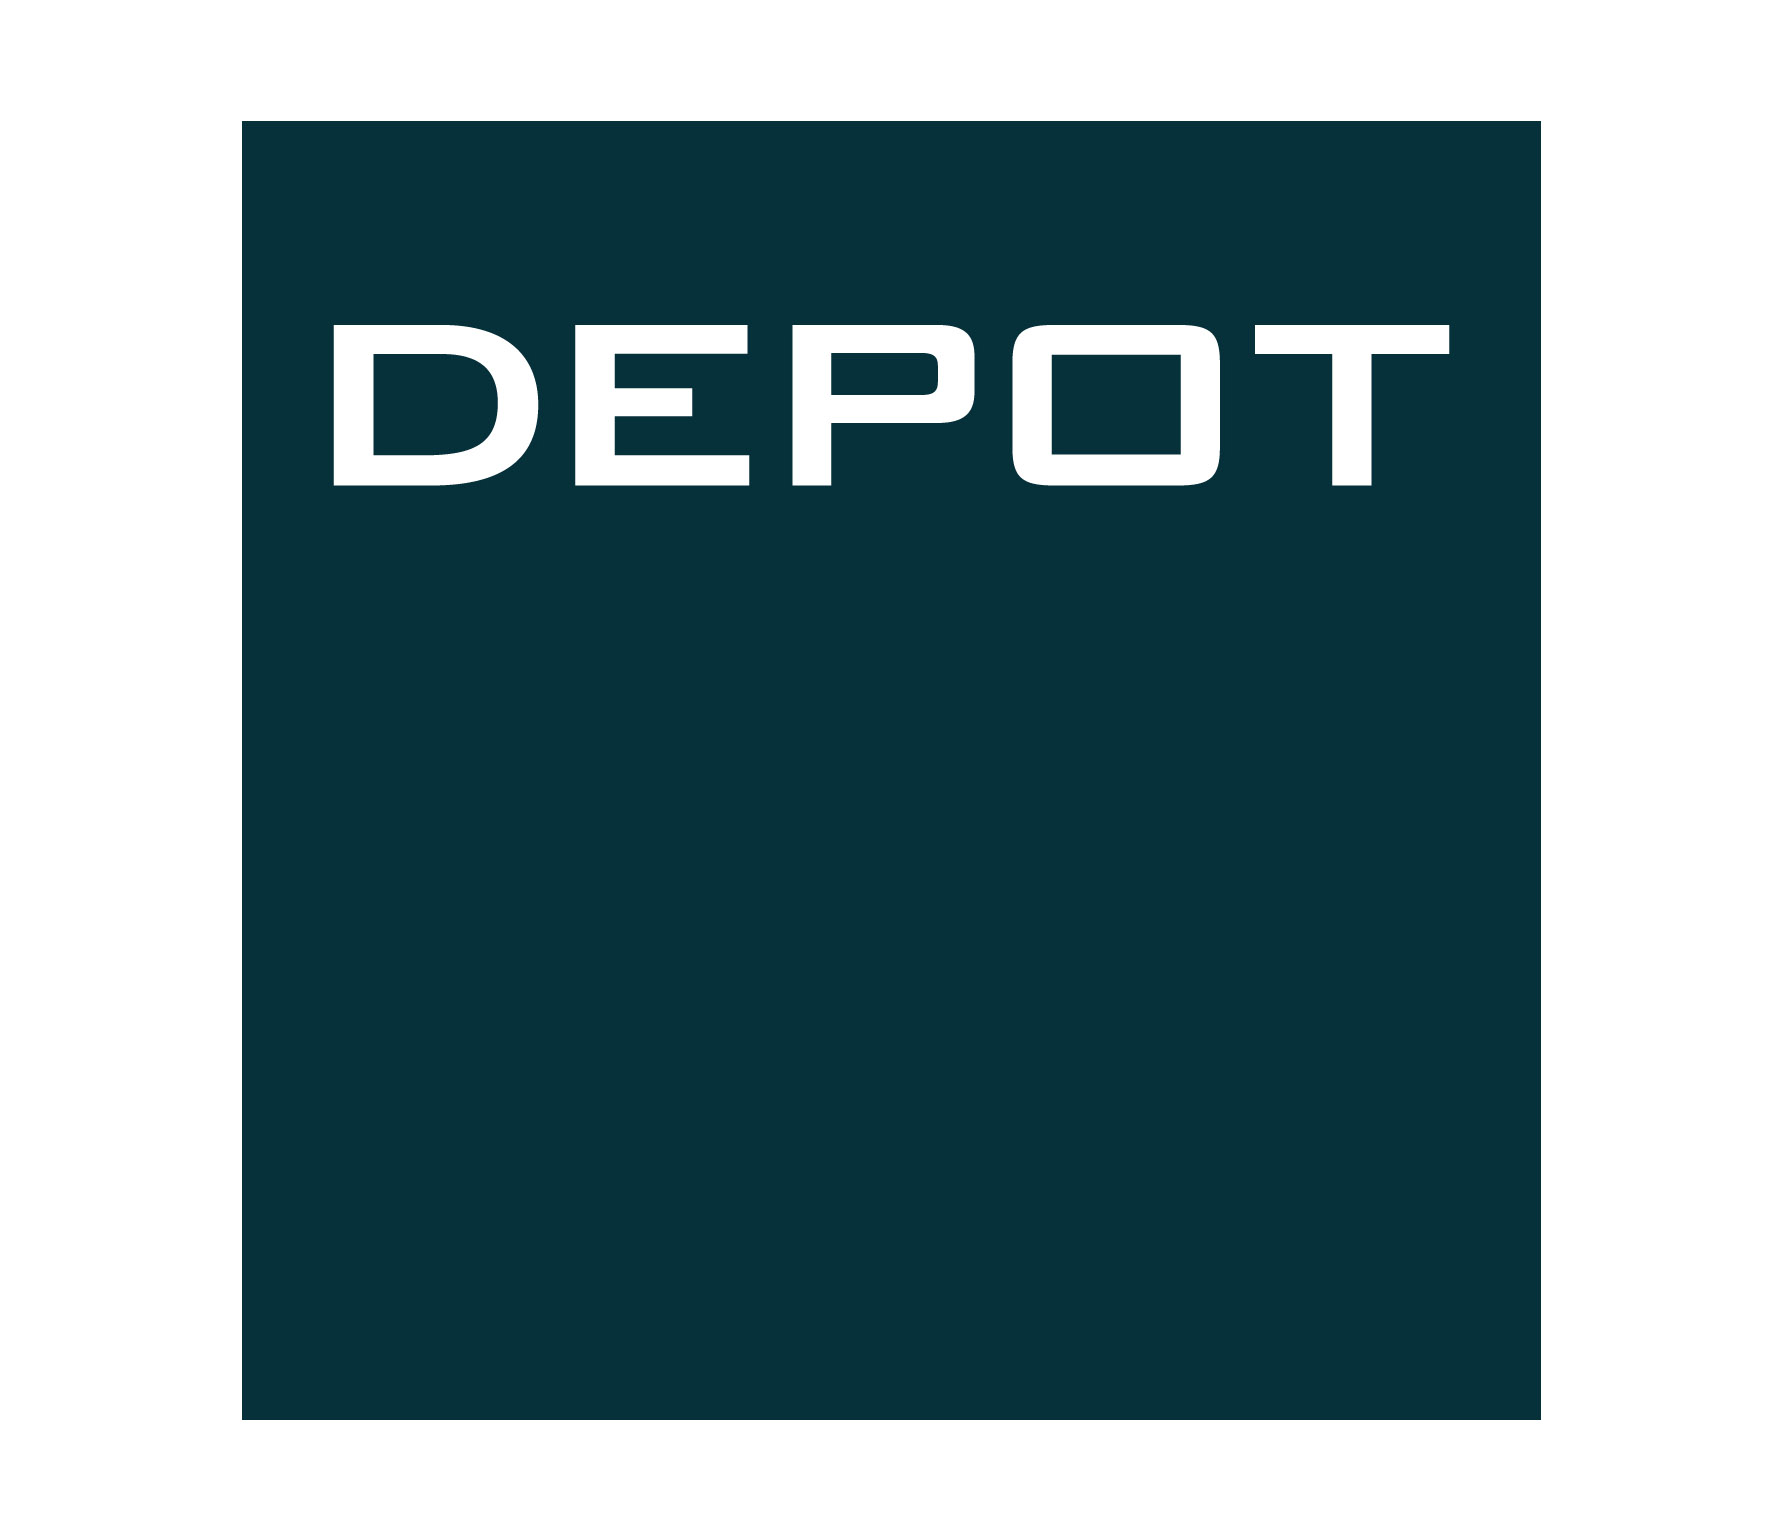 Depot Logo web